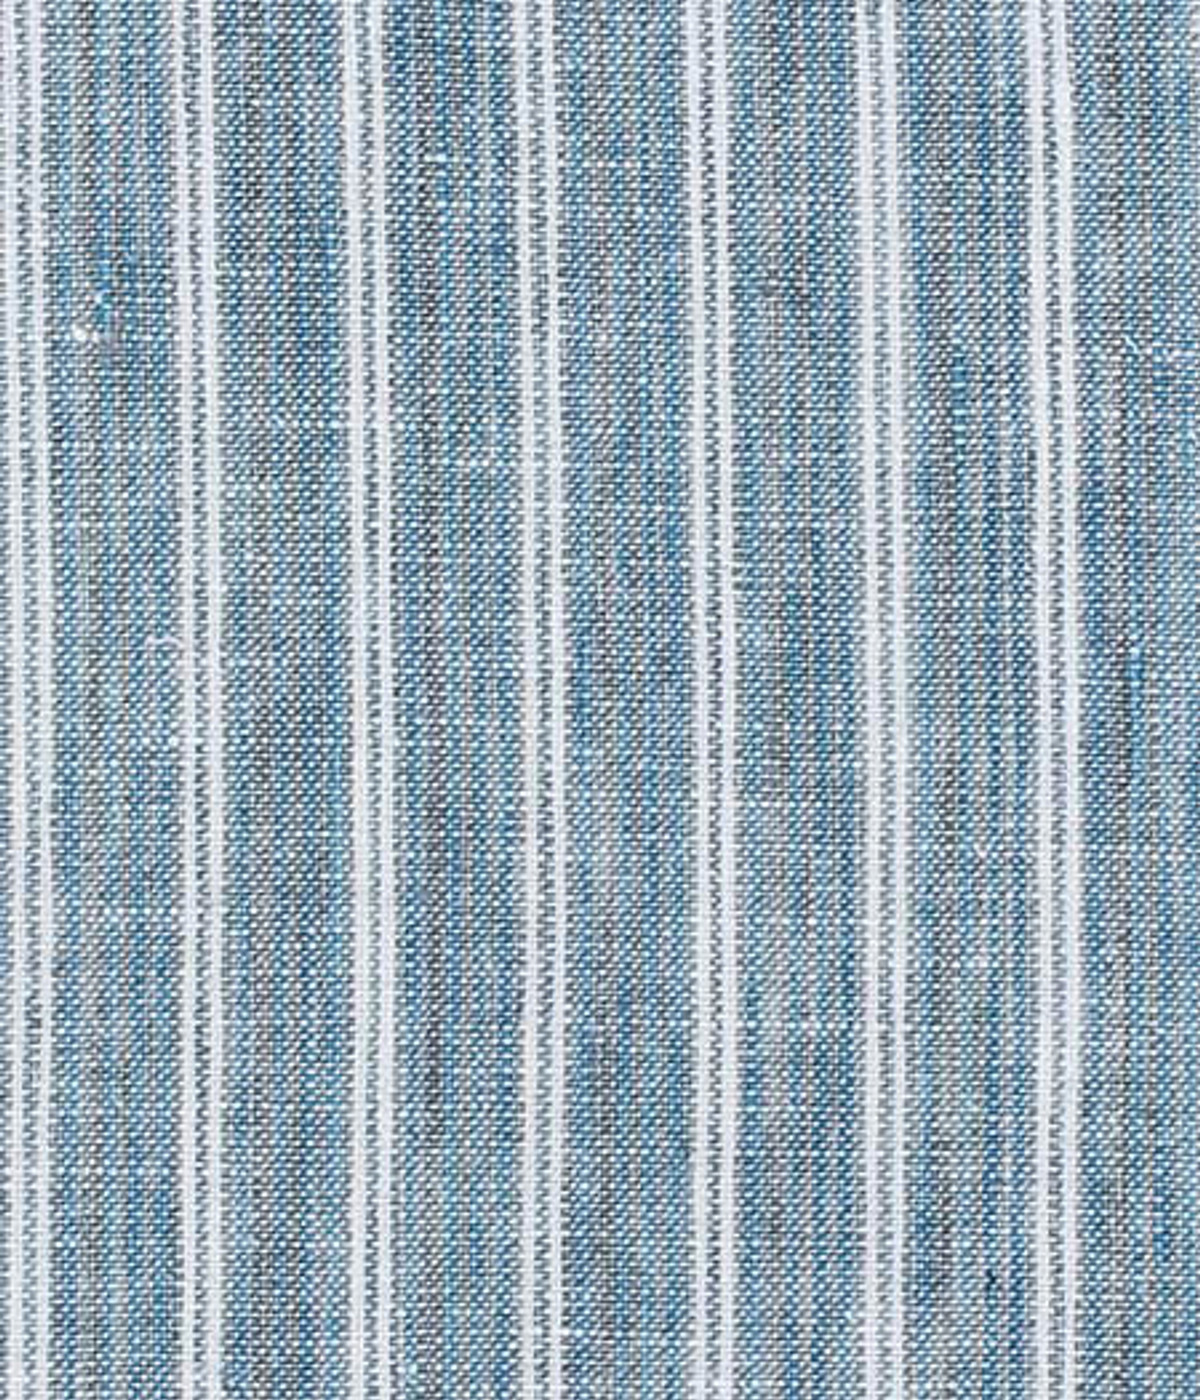 East Hampton Blue Linen Striped Shorts- view-3